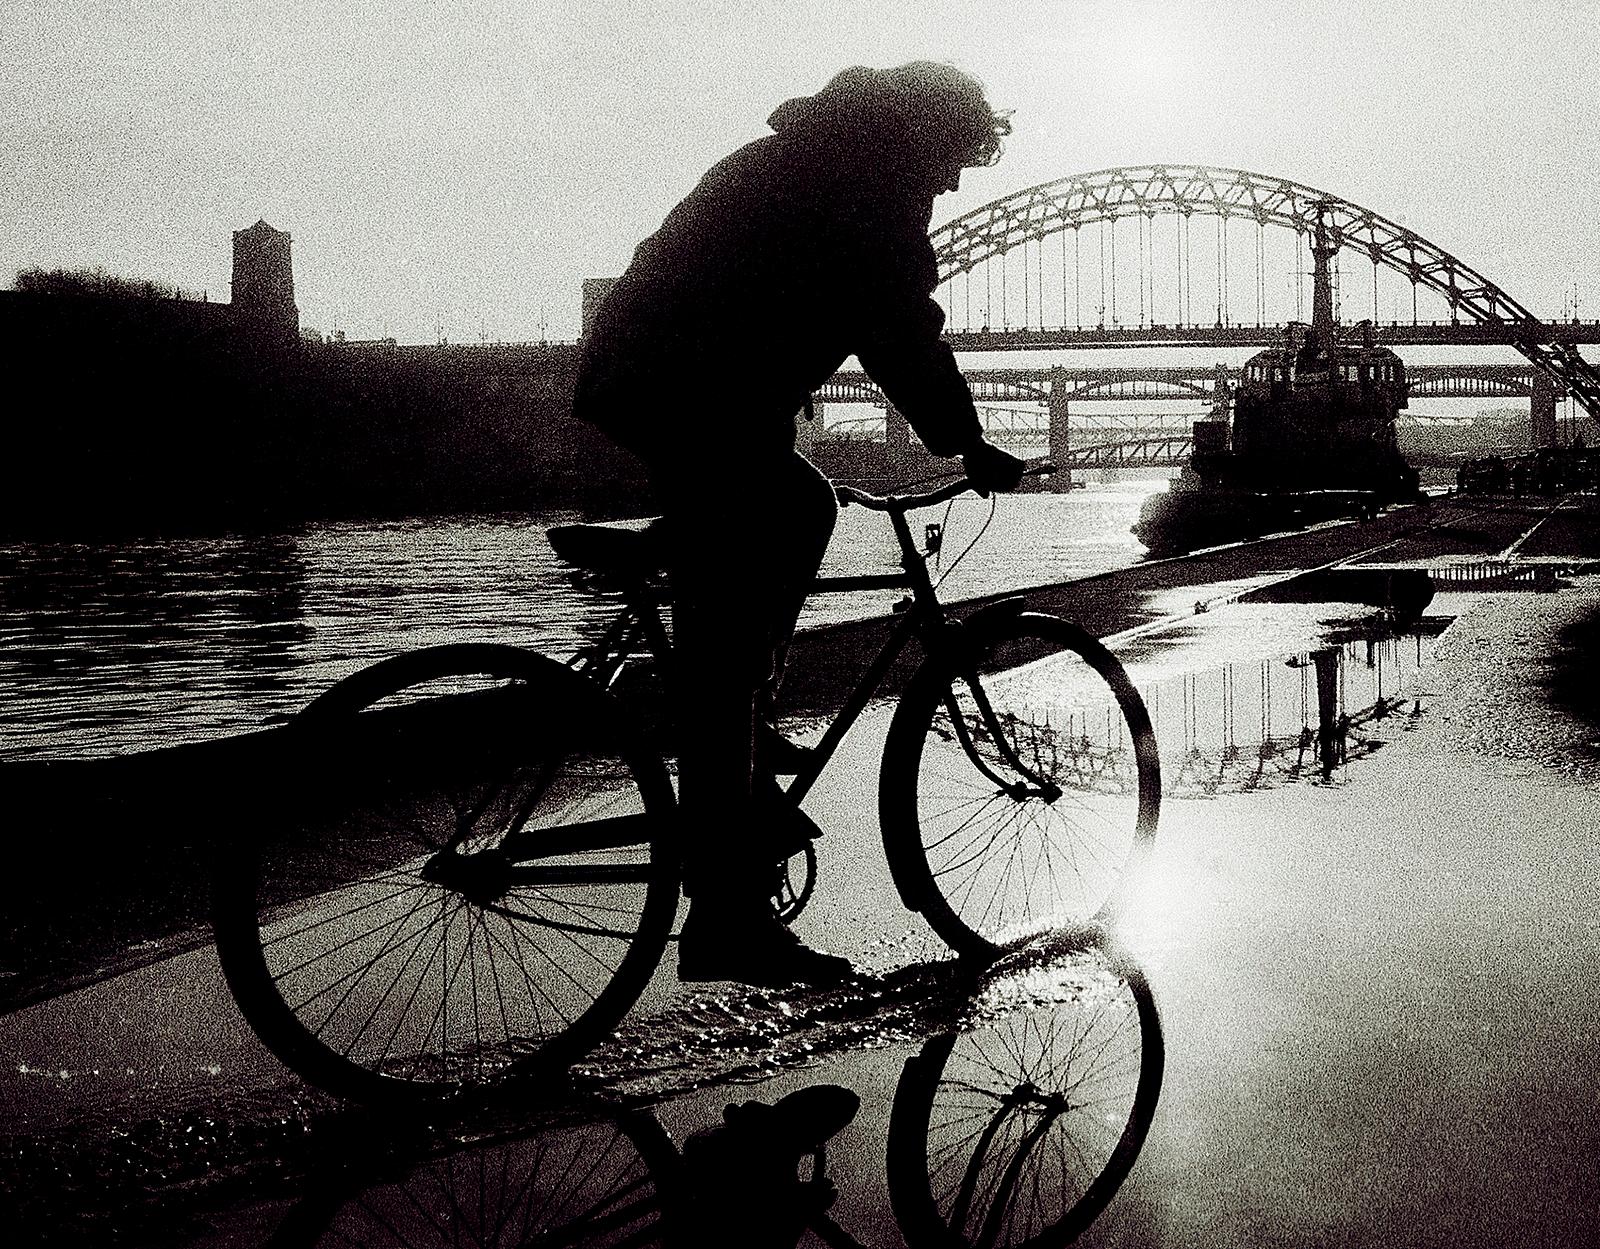 City Landscape print, black white, Contemporary, Analogue photo - Newcastle  - Photograph by Ian Sanderson